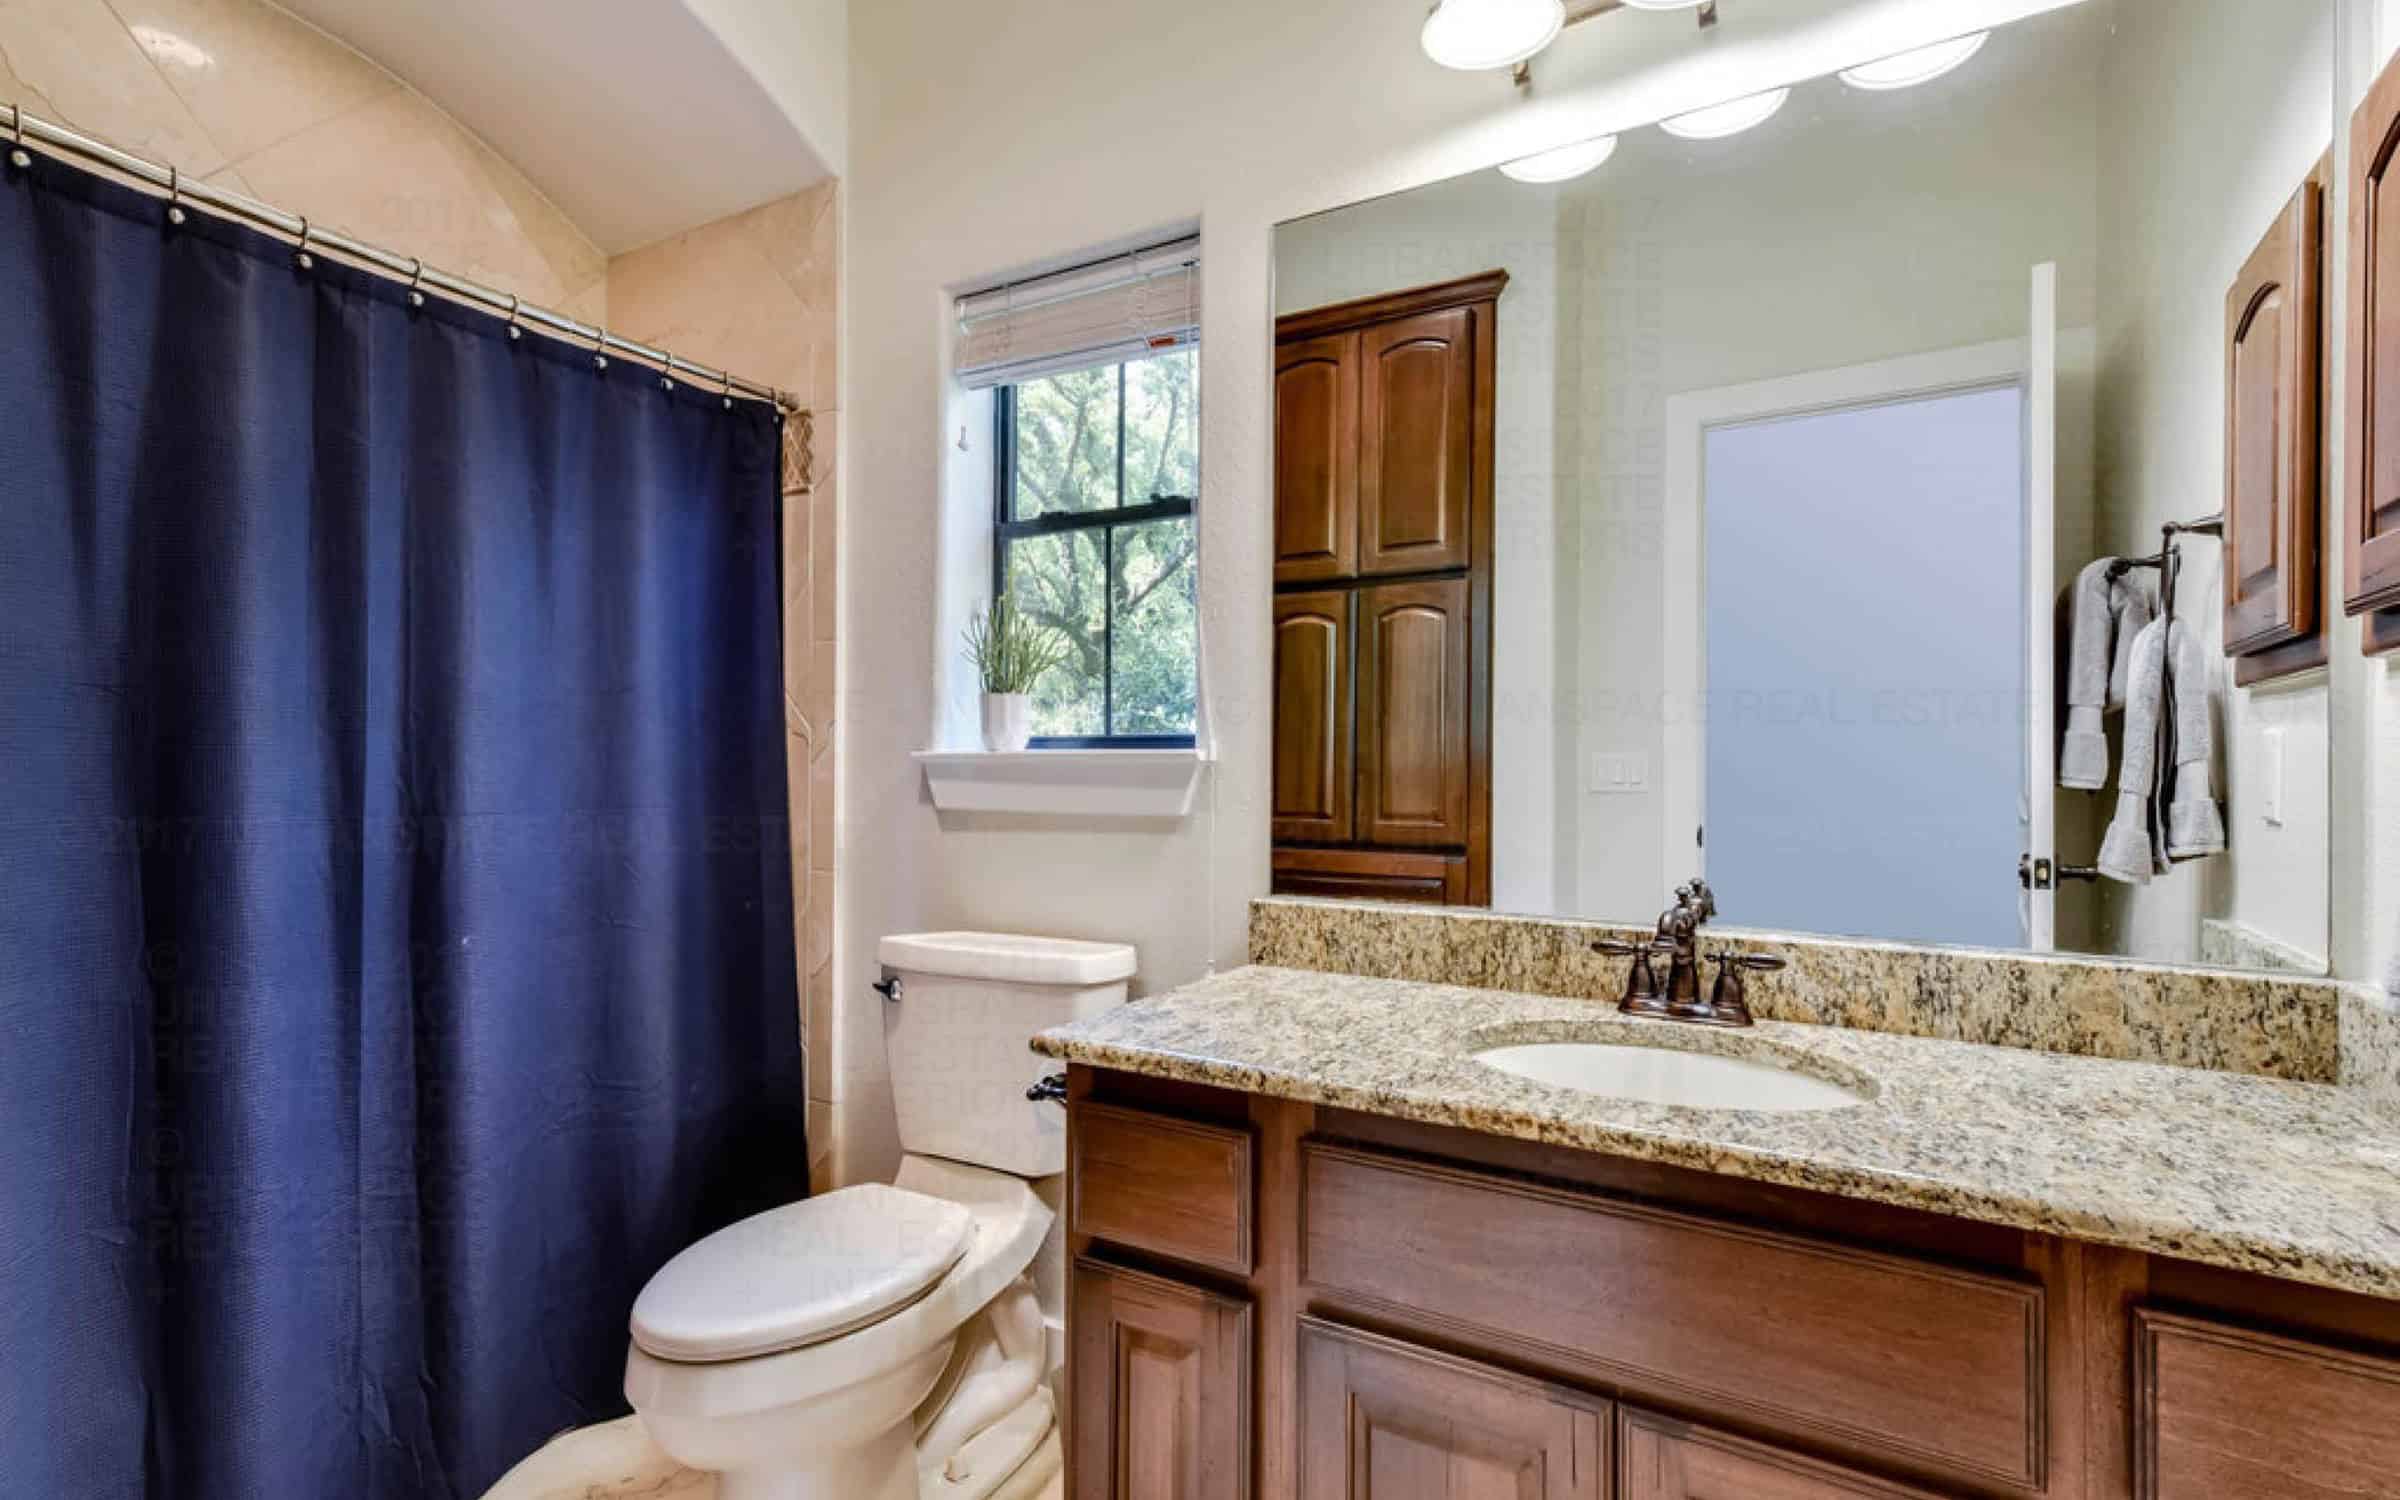 bathroom sink mirror shower tub liberty park austin home